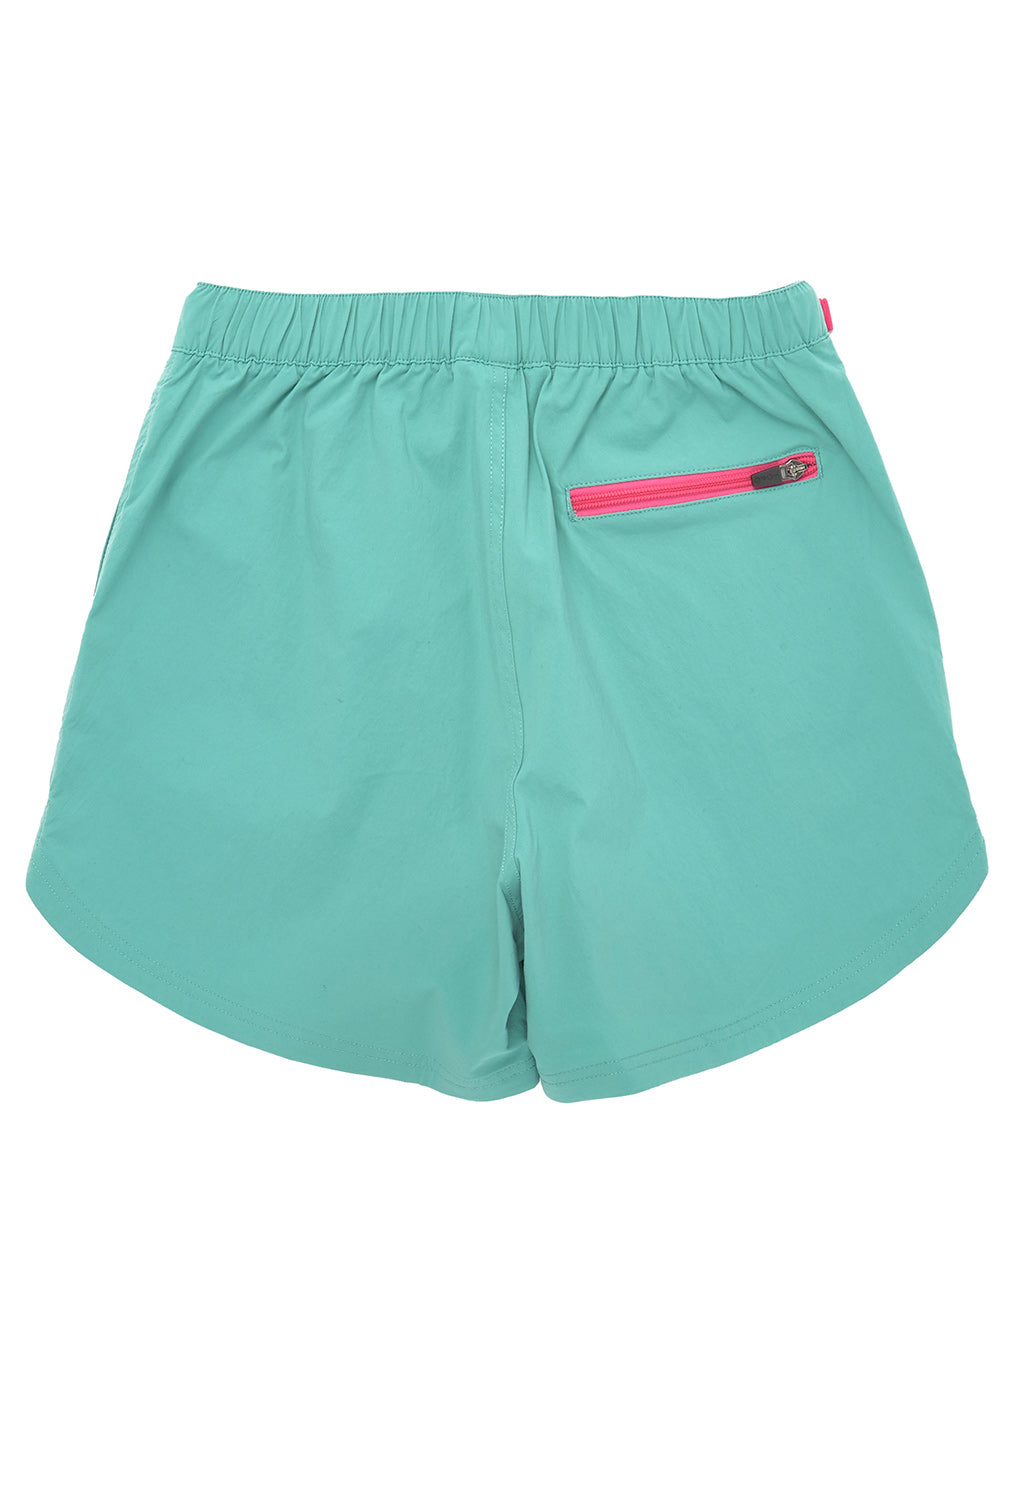 Topo Designs Women's River Shorts - Geode Green